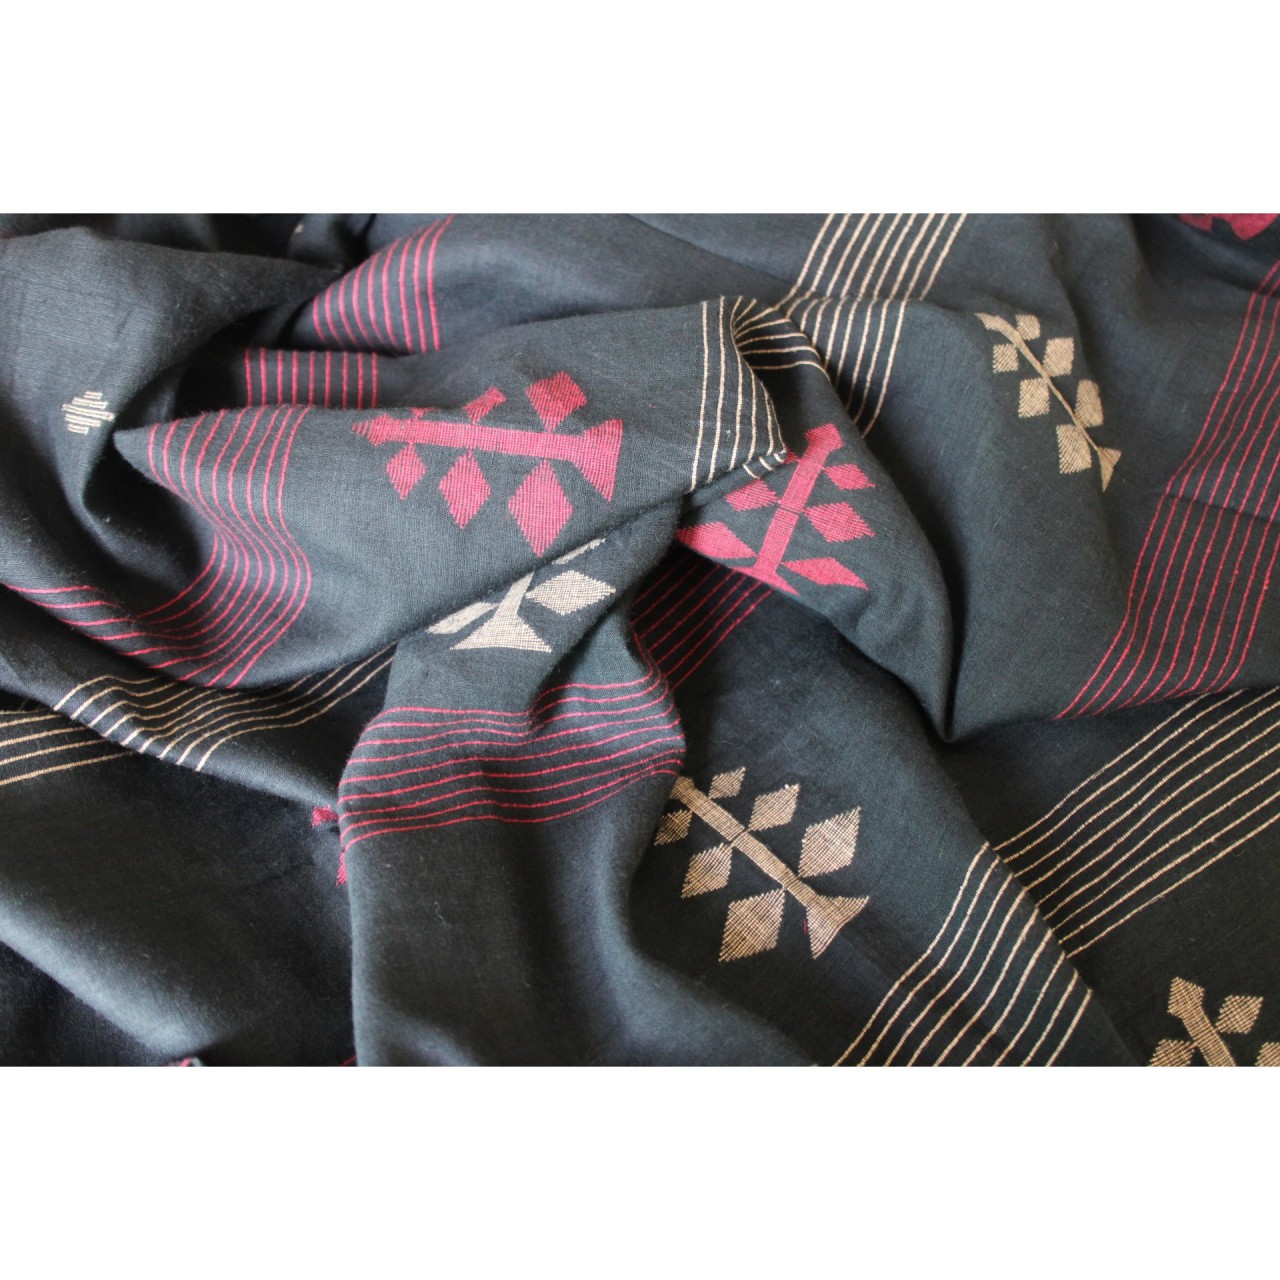 (1152) Cotton Azo-free dyed Jamdani sari from Burdwan with cotton motifs - Black, maroon